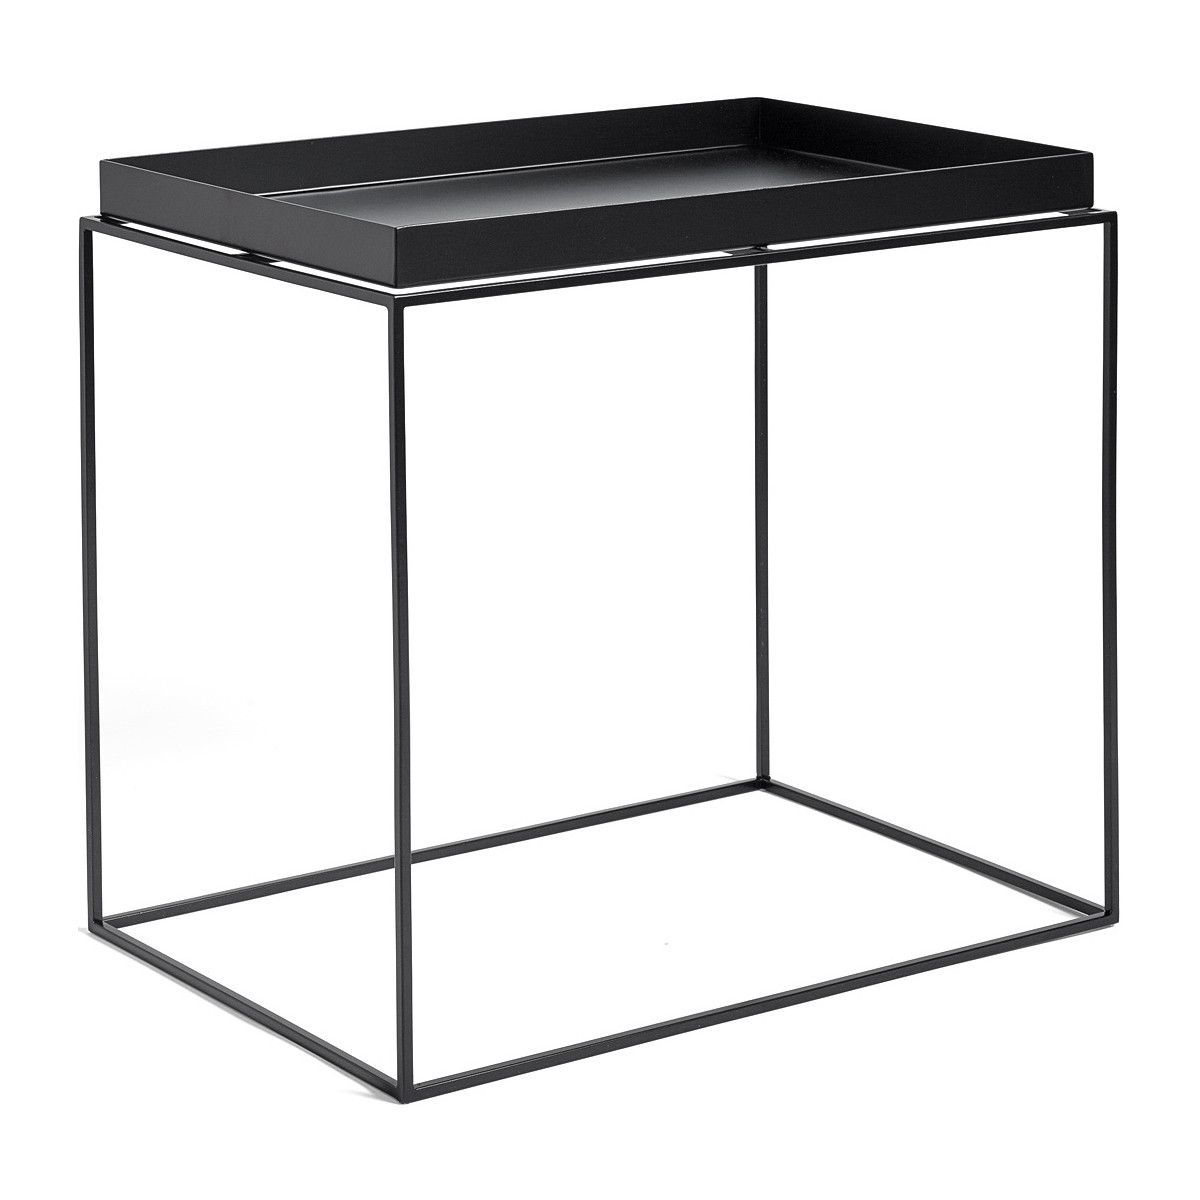 Tray Table L – 60 x 40 x H54 cm – Black